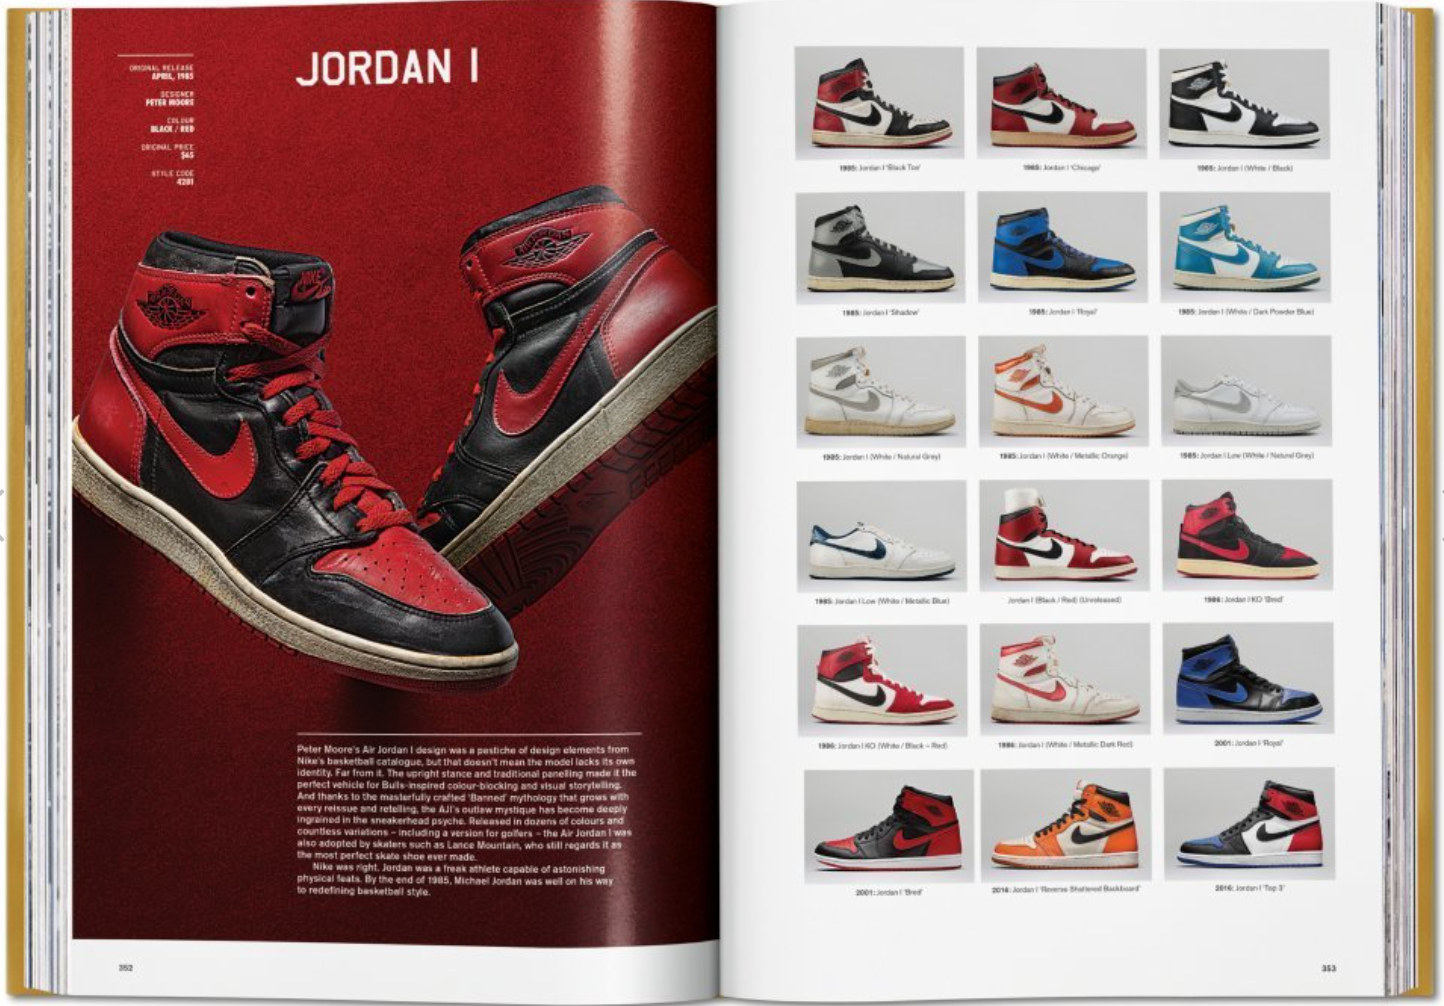 The Ultimate Sneaker Book